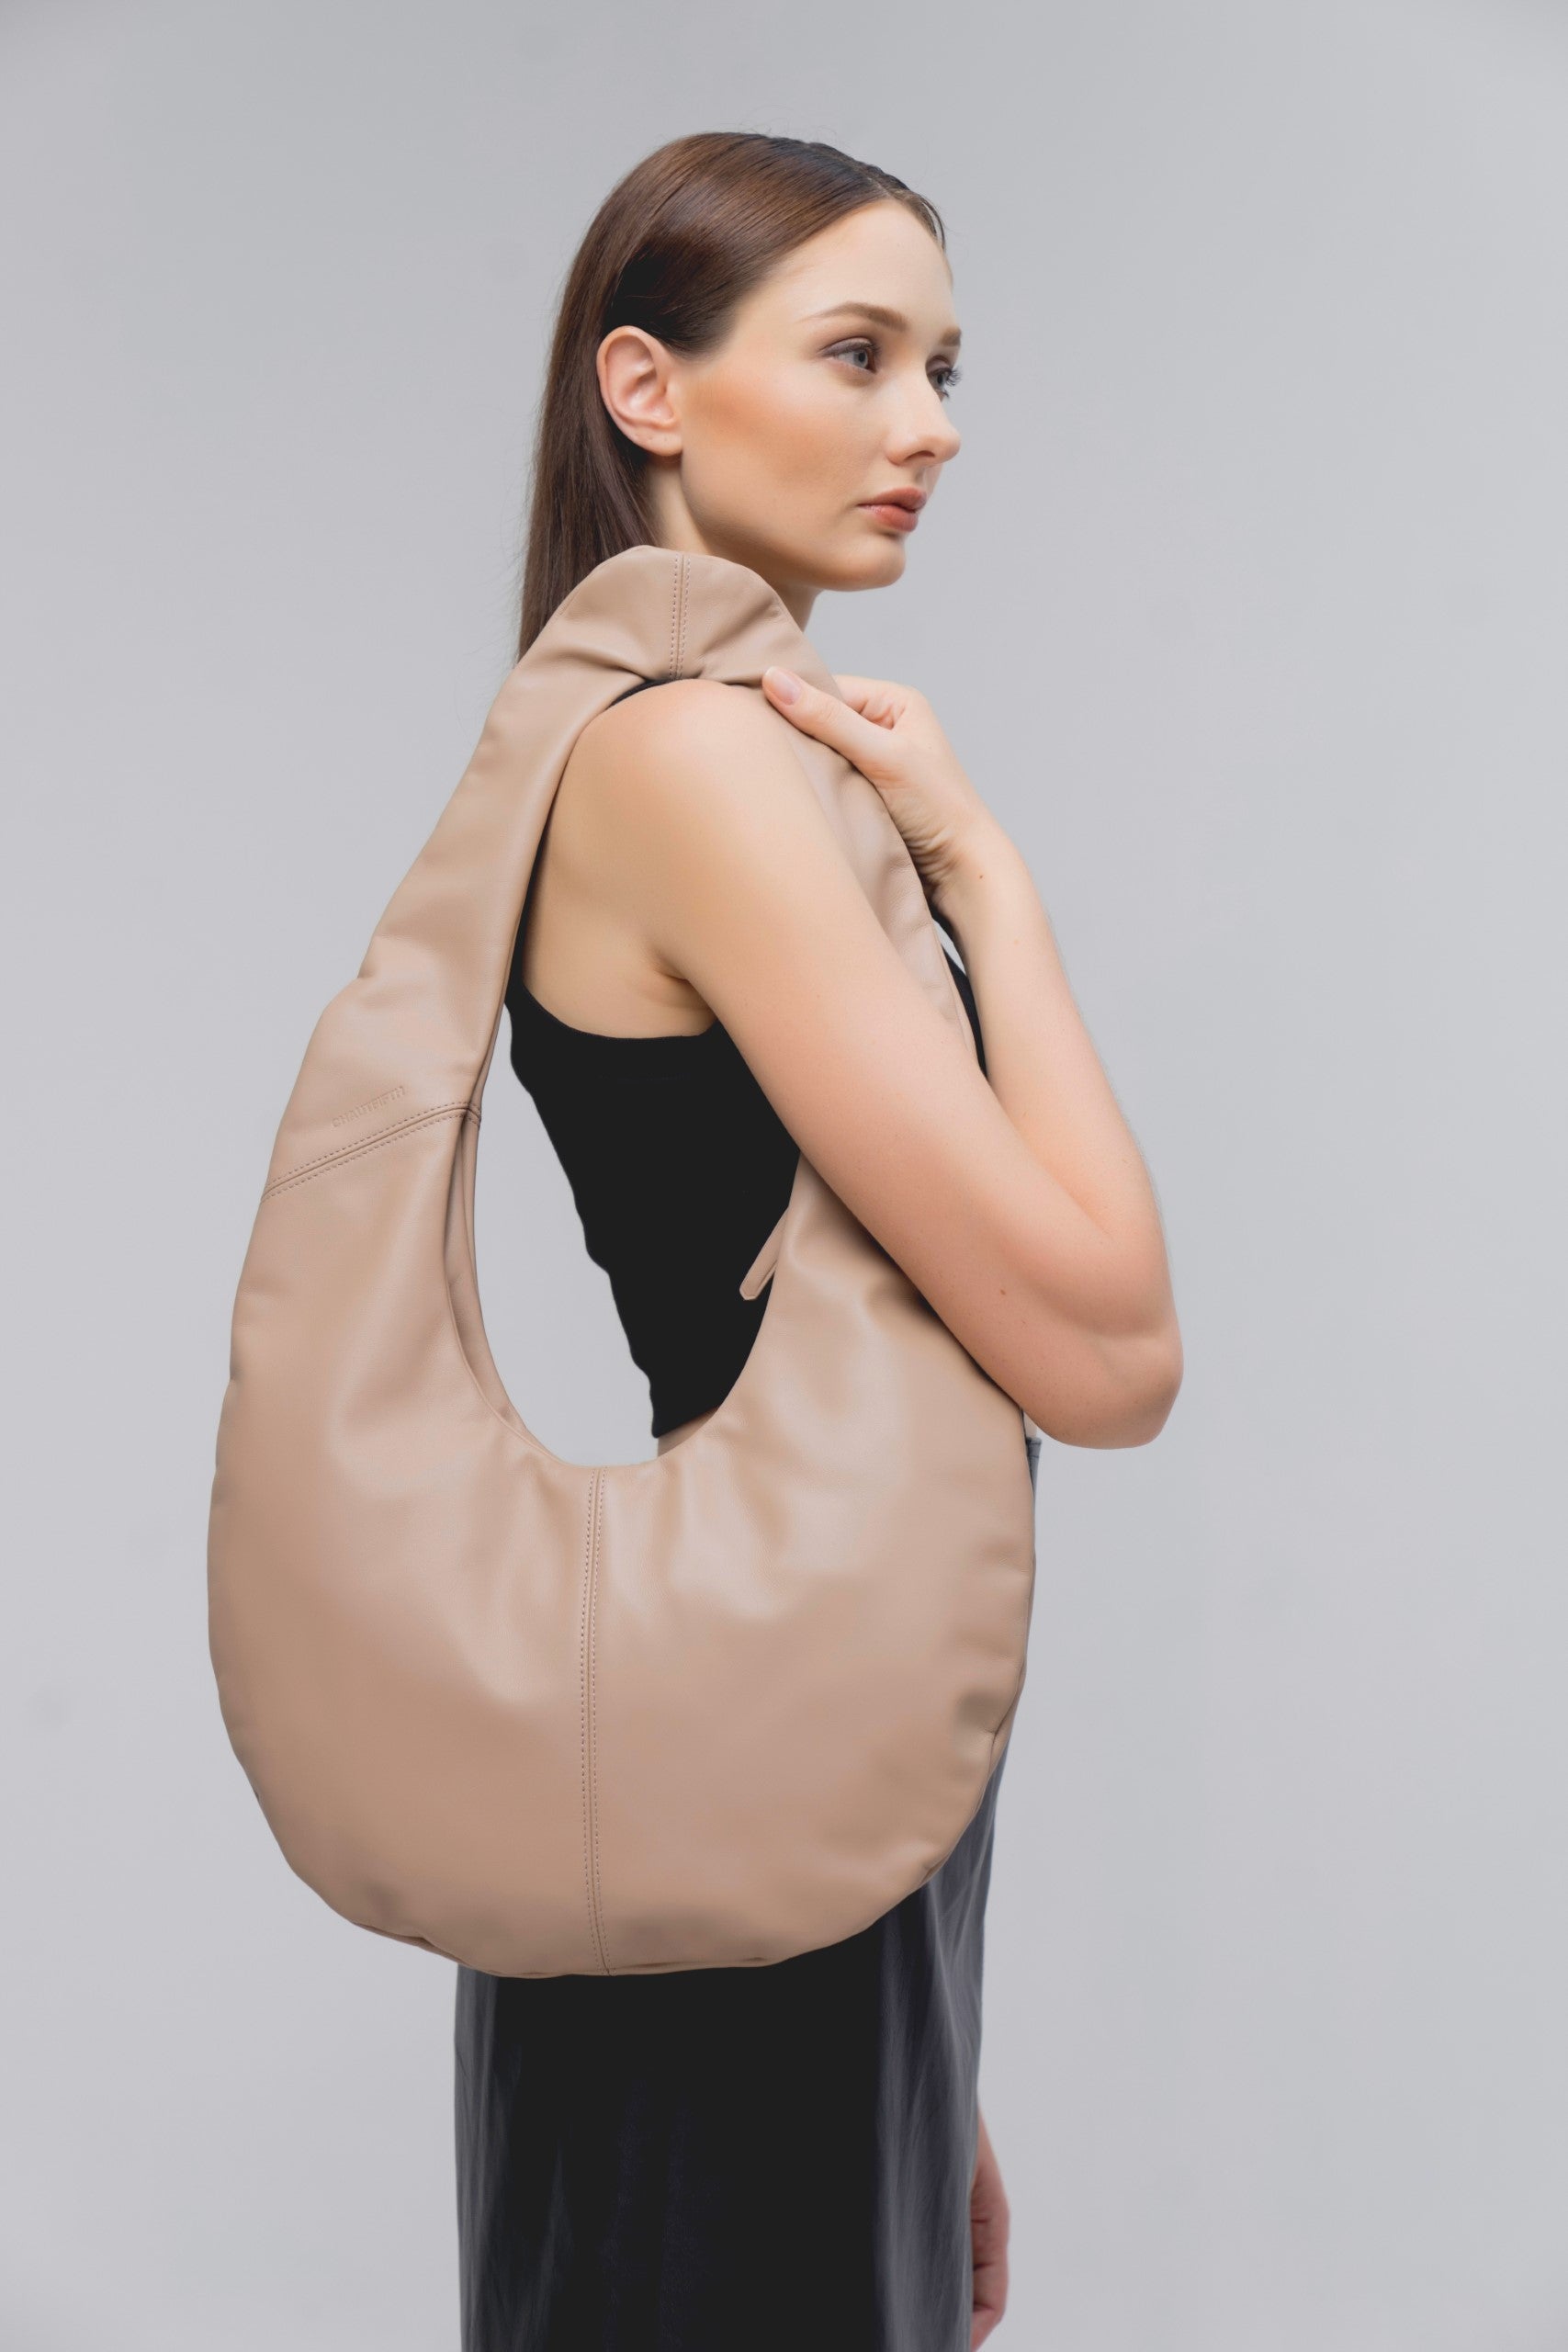 Cream RAINDROP handbag (real leather)